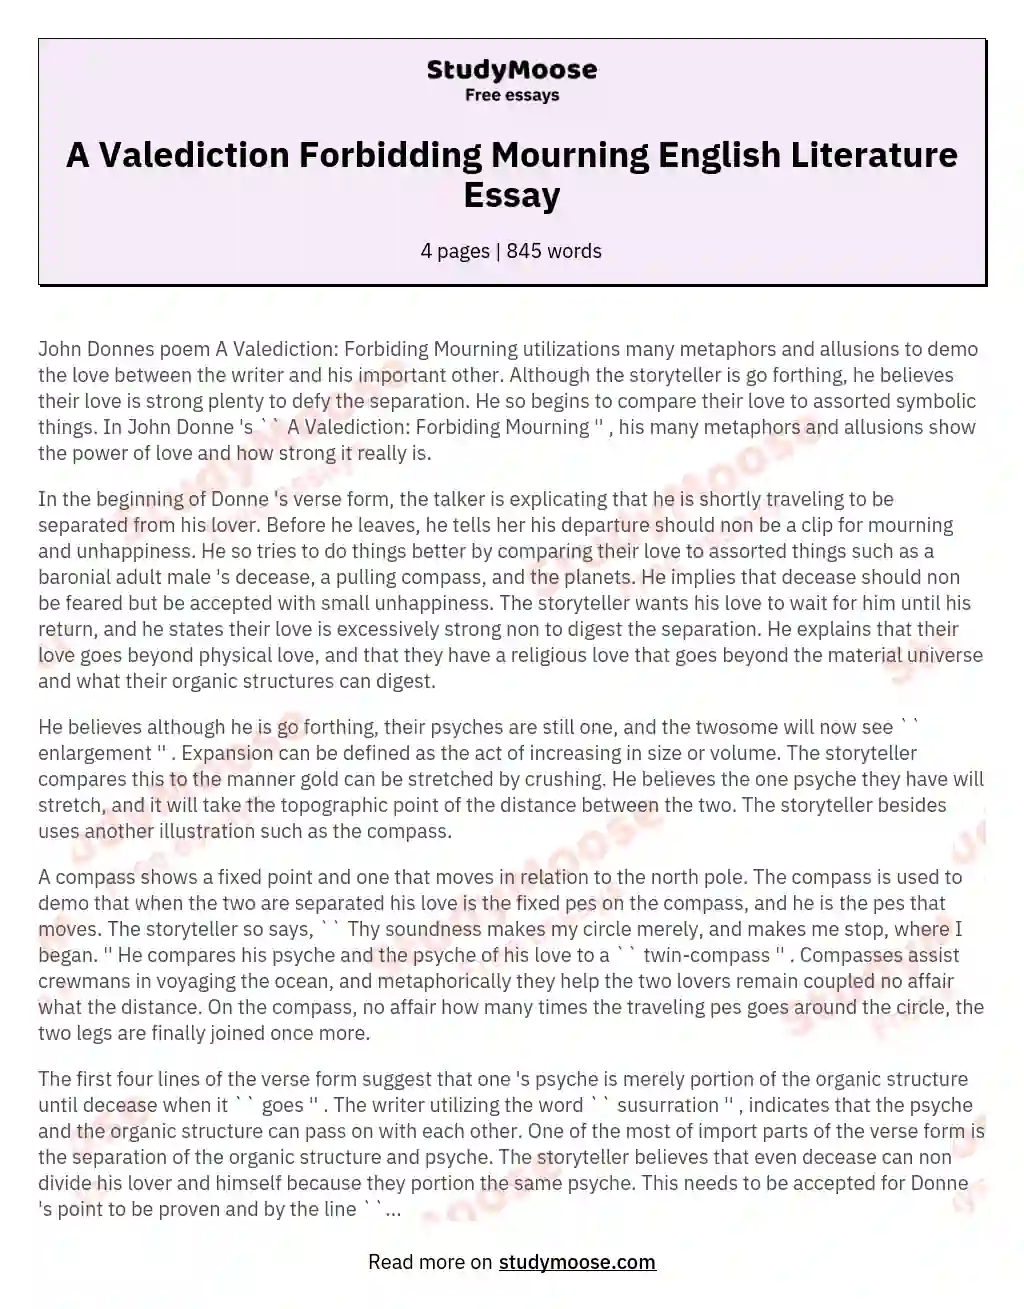 A Valediction Forbidding Mourning English Literature Essay essay